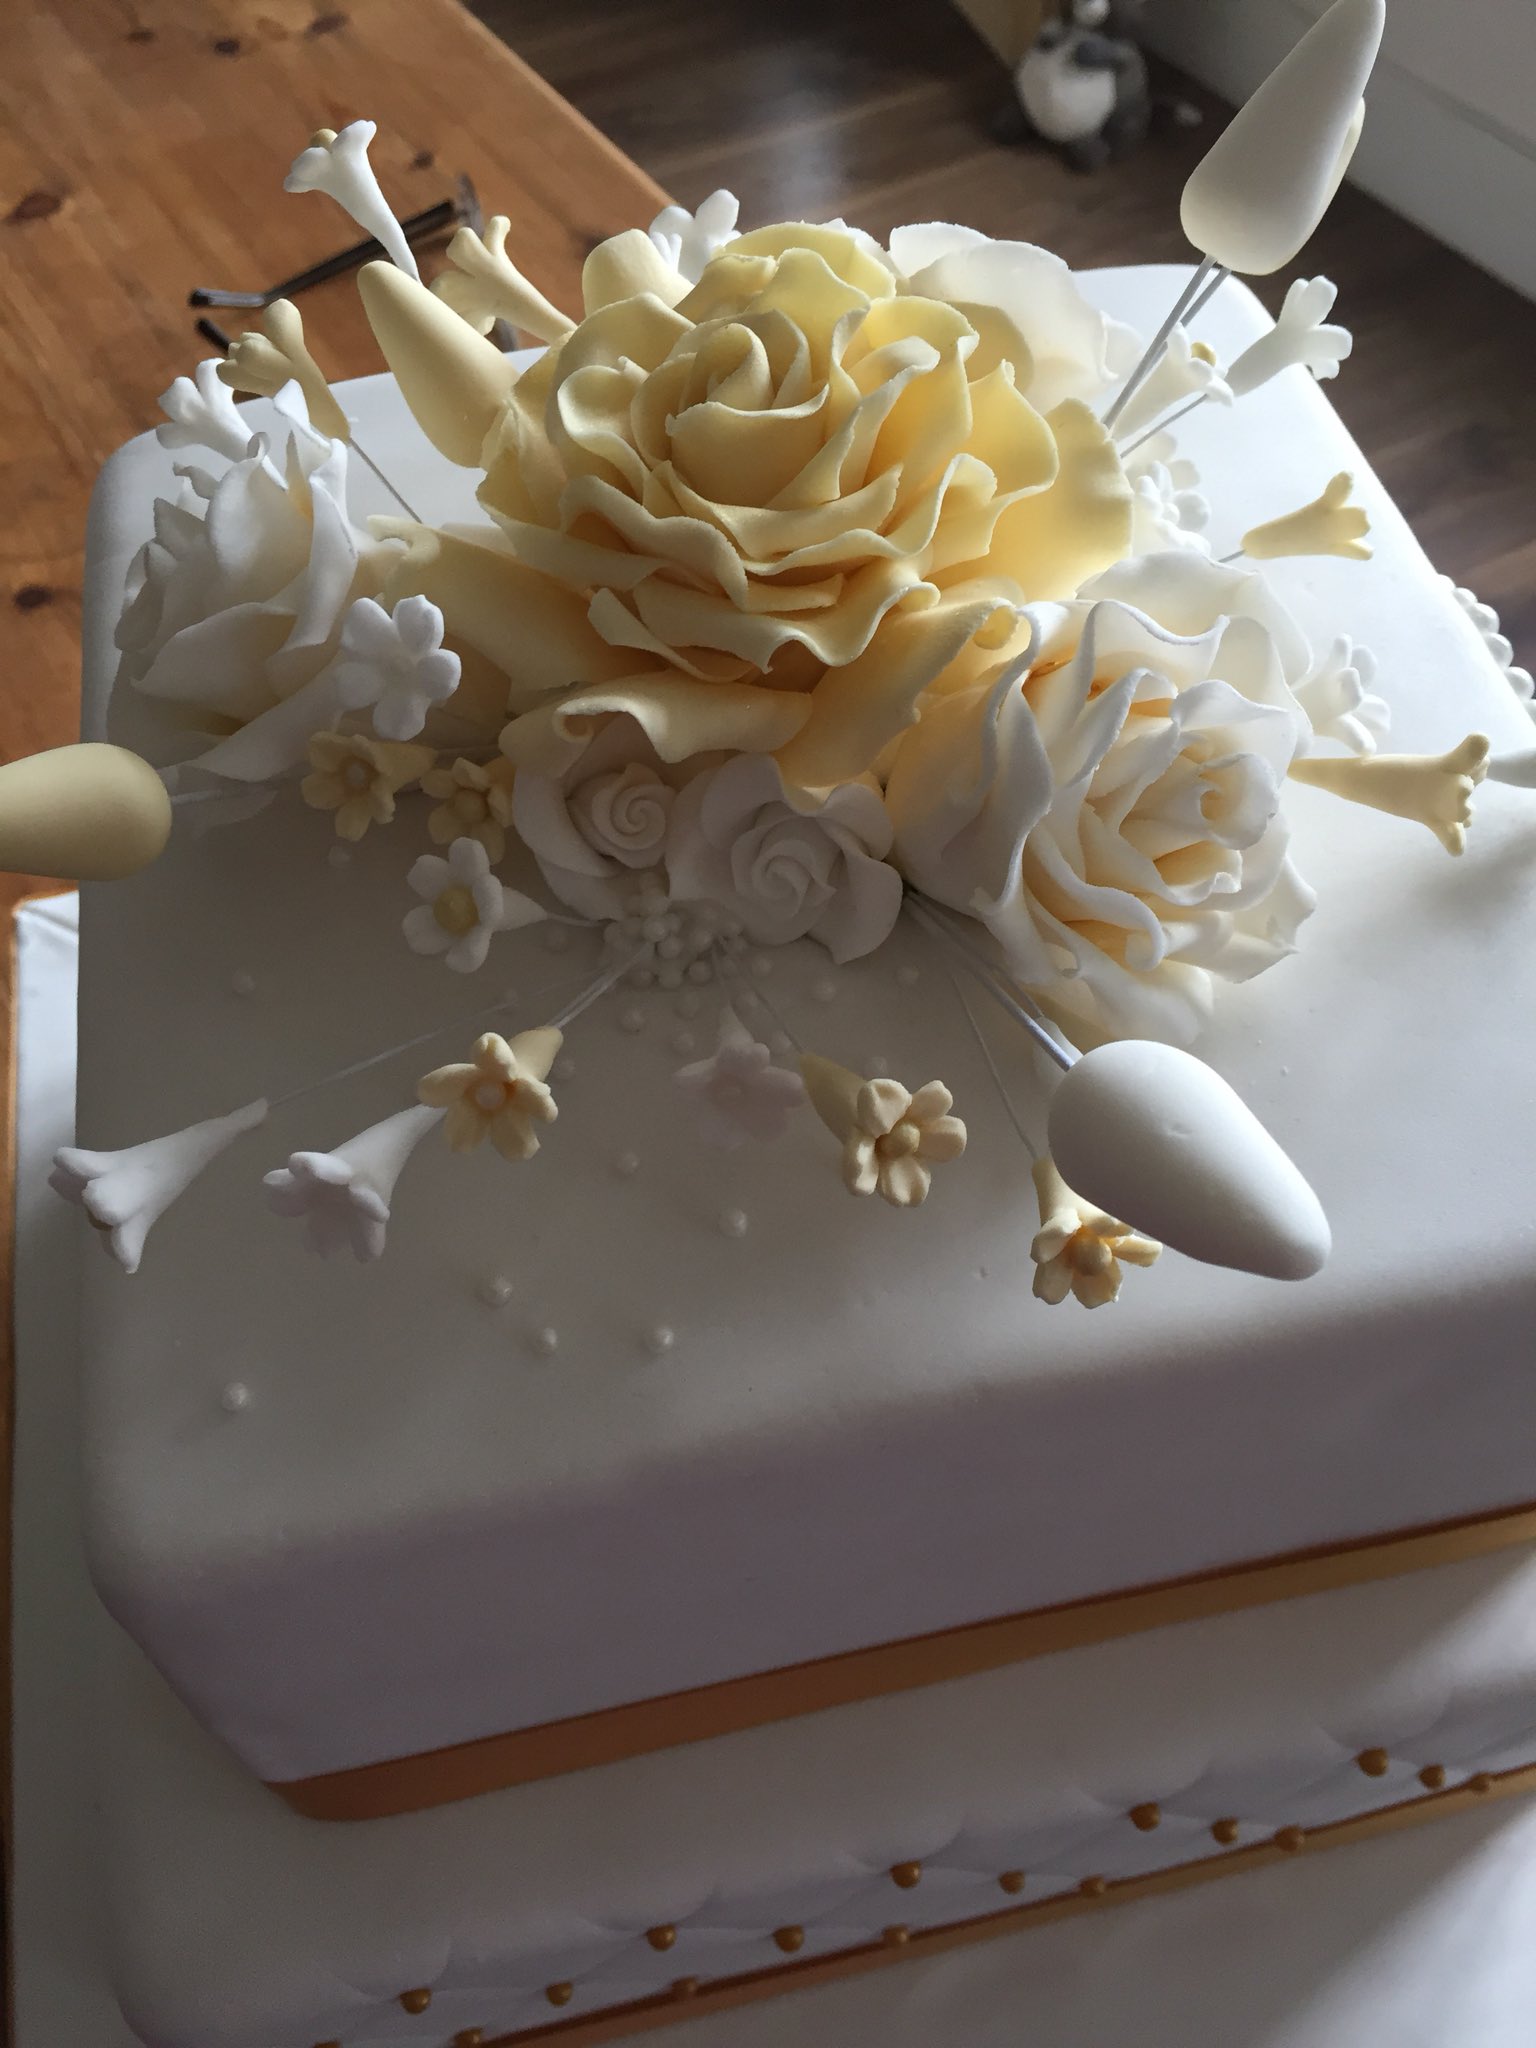 Clinton's Cakes on Twitter: "Golden wedding anniversary....#cake #